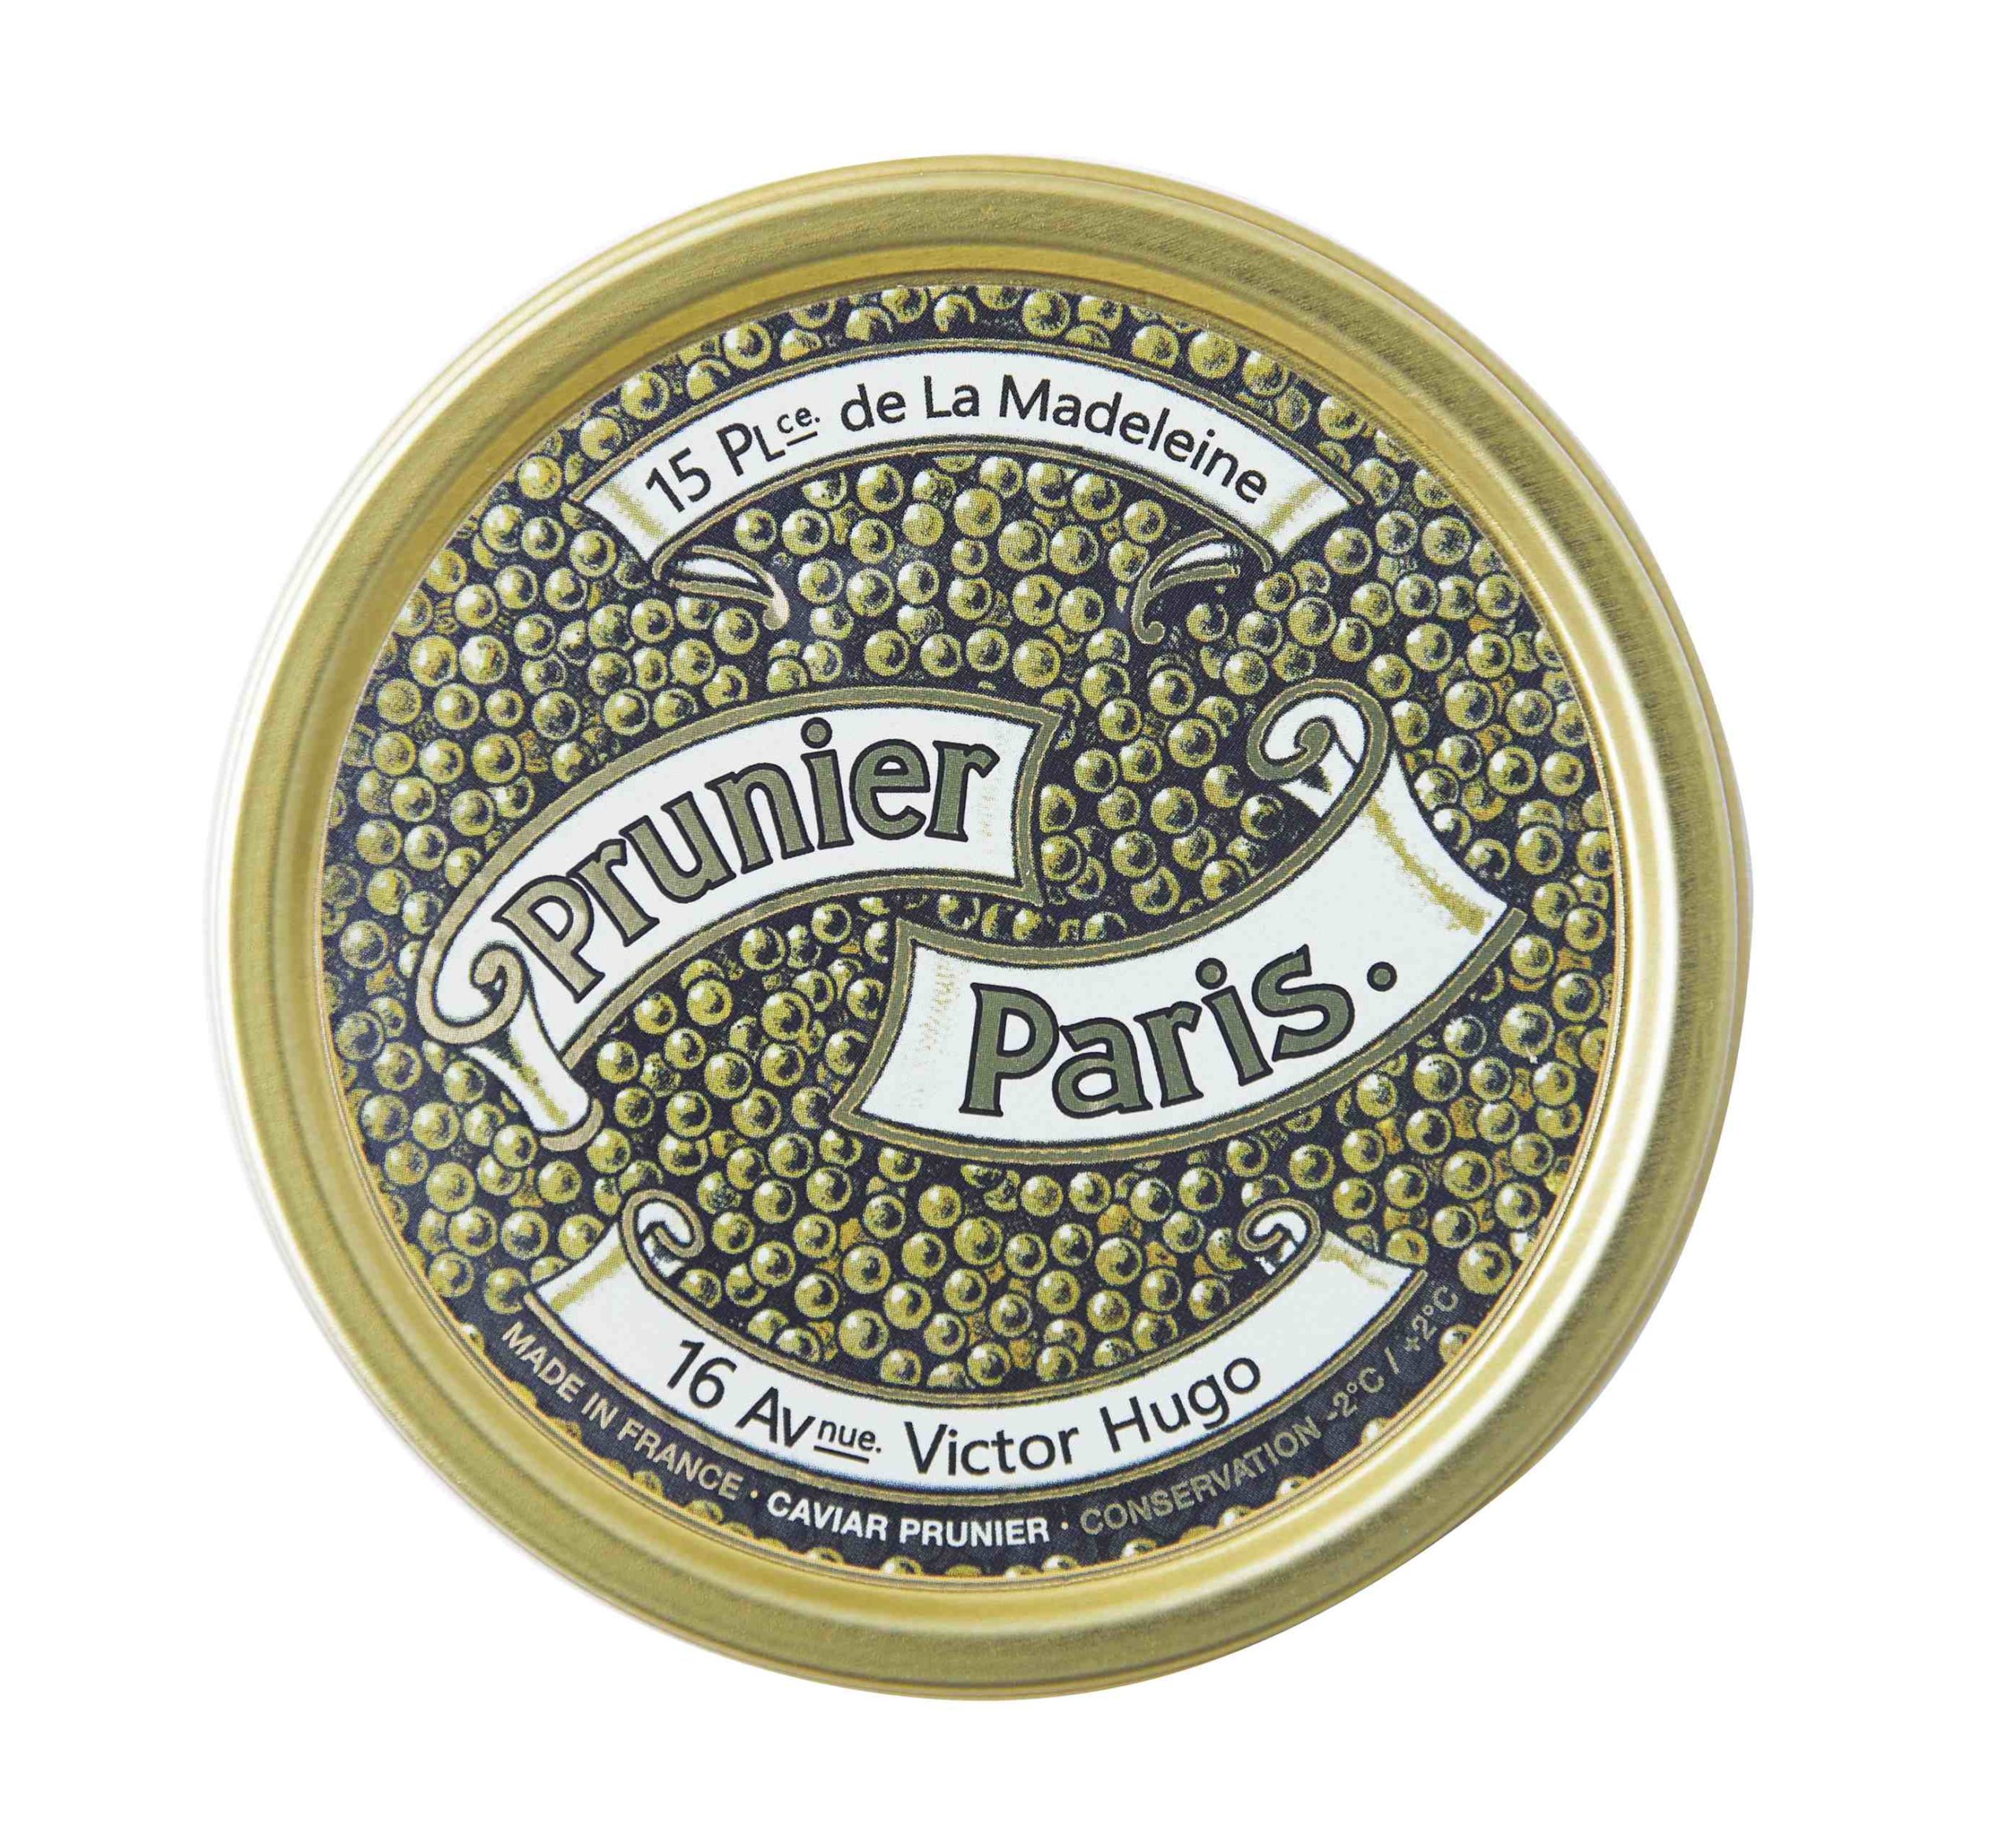 Prunier ou 100 années de caviar français - L'Evasion des Sens